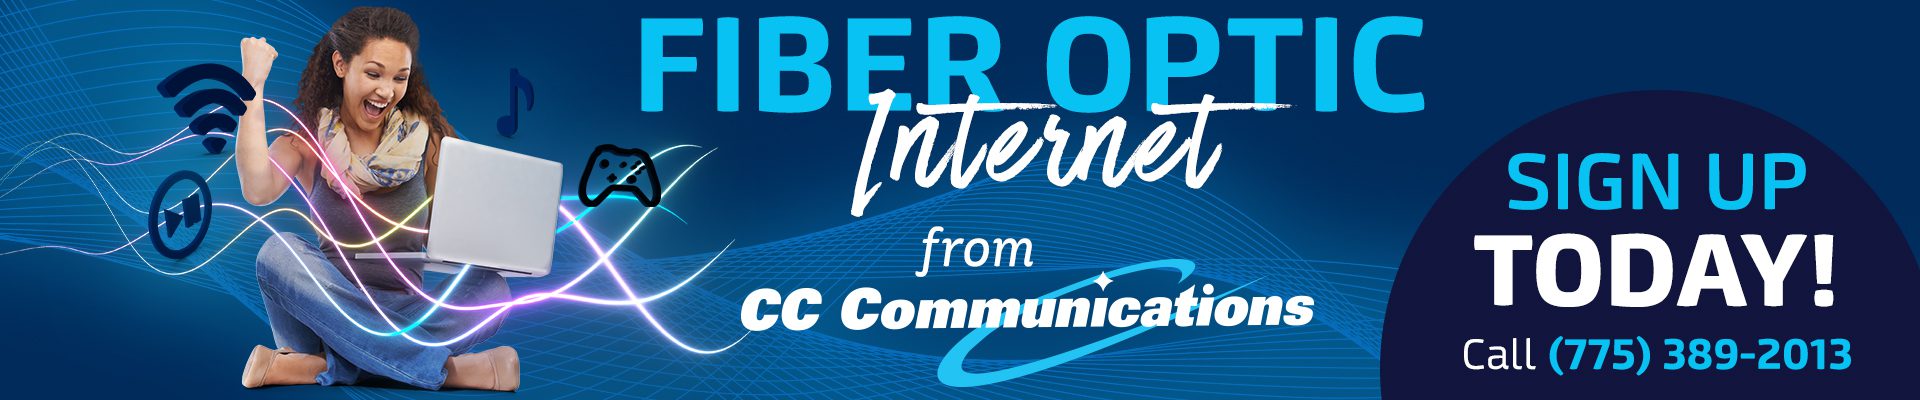 Fiber Optic Internet from CC Communications.